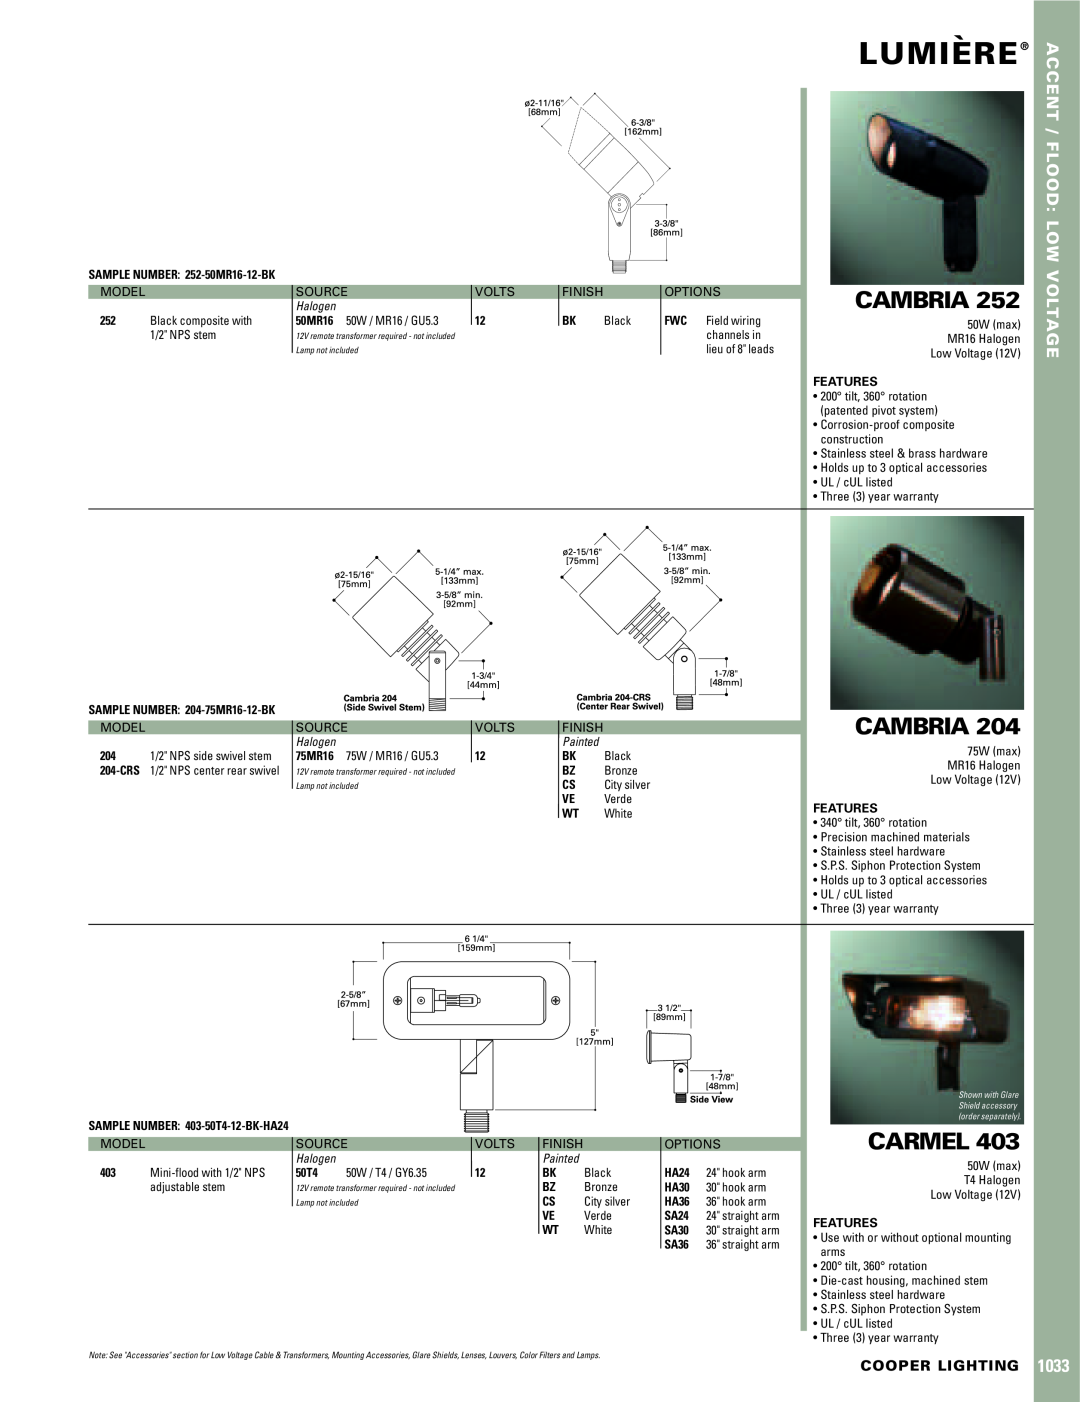 Cooper Lighting 403 warranty Lumiere`, Cambria, Carmel, Accent / Flood Low Voltage, Cooper Lighting, Halogen, Features 